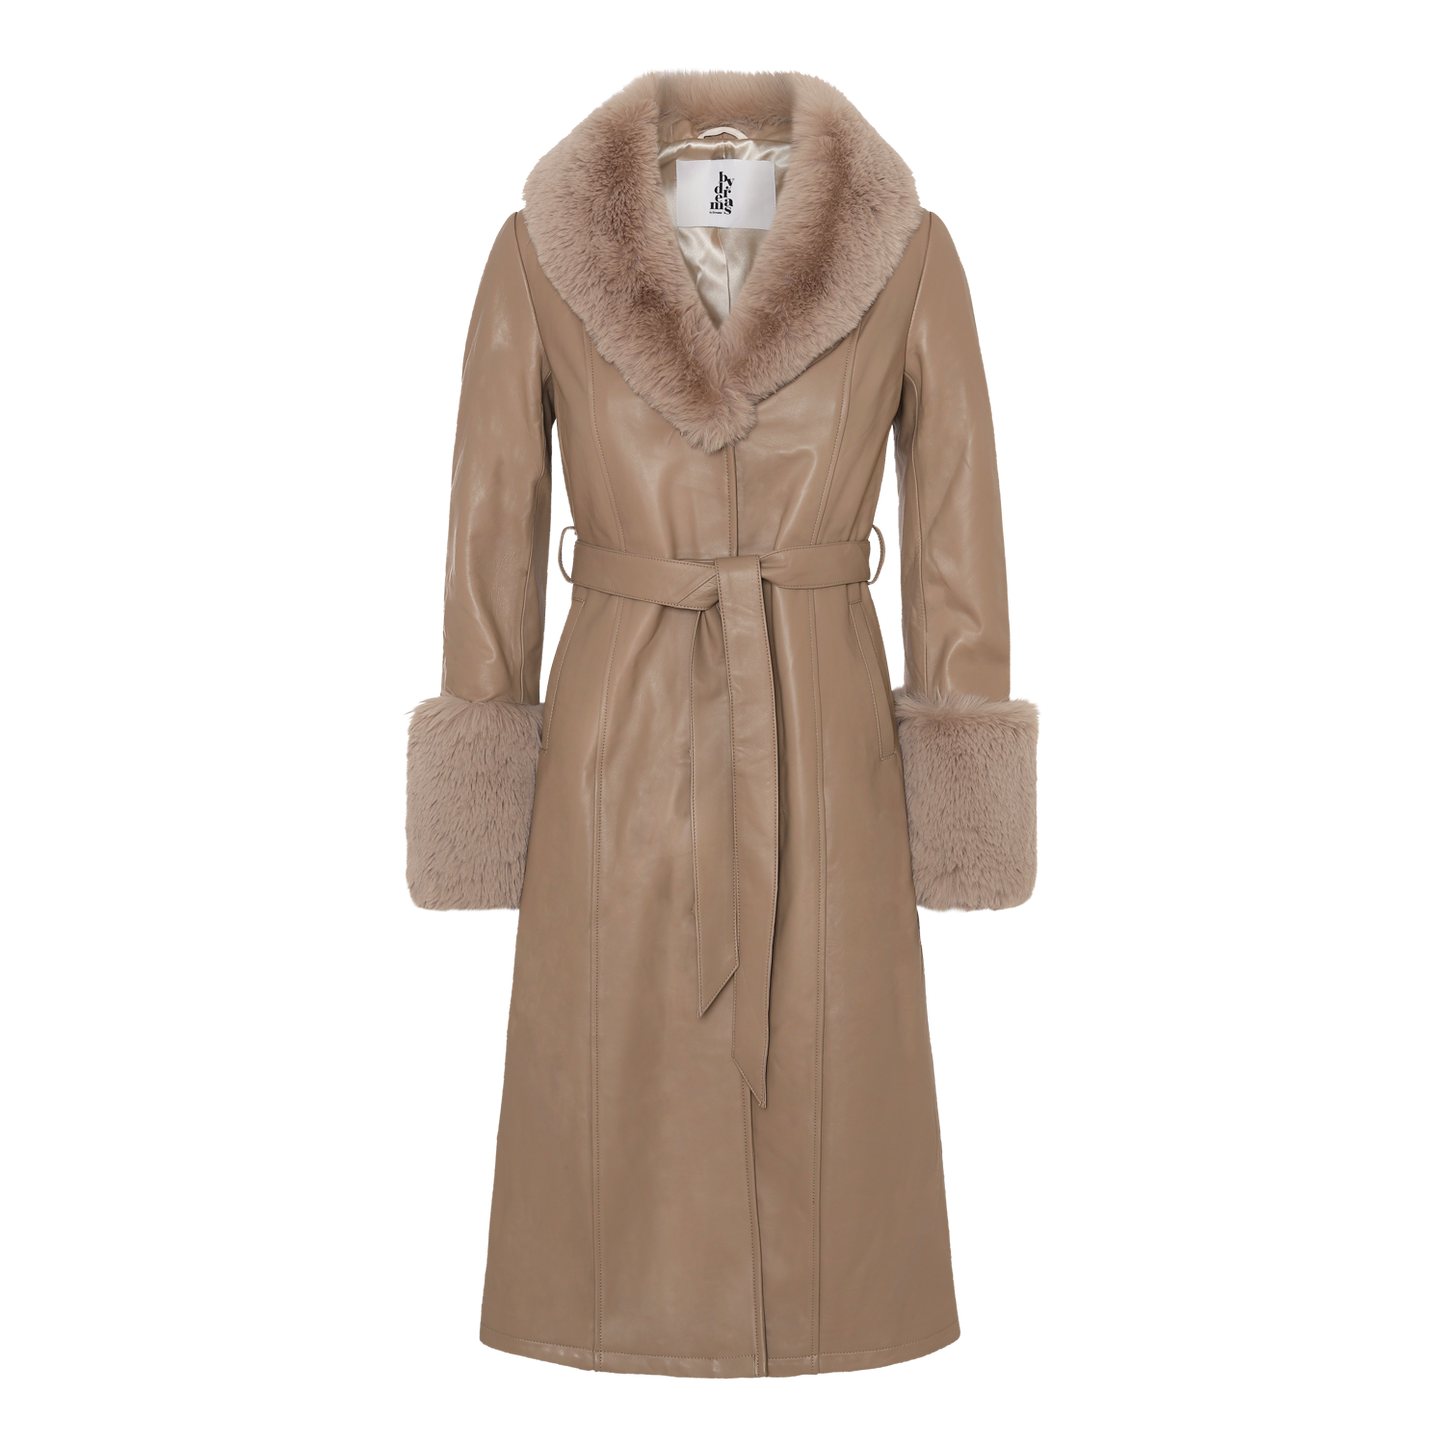 Bella Leather Coat Long Light Brown - Sample